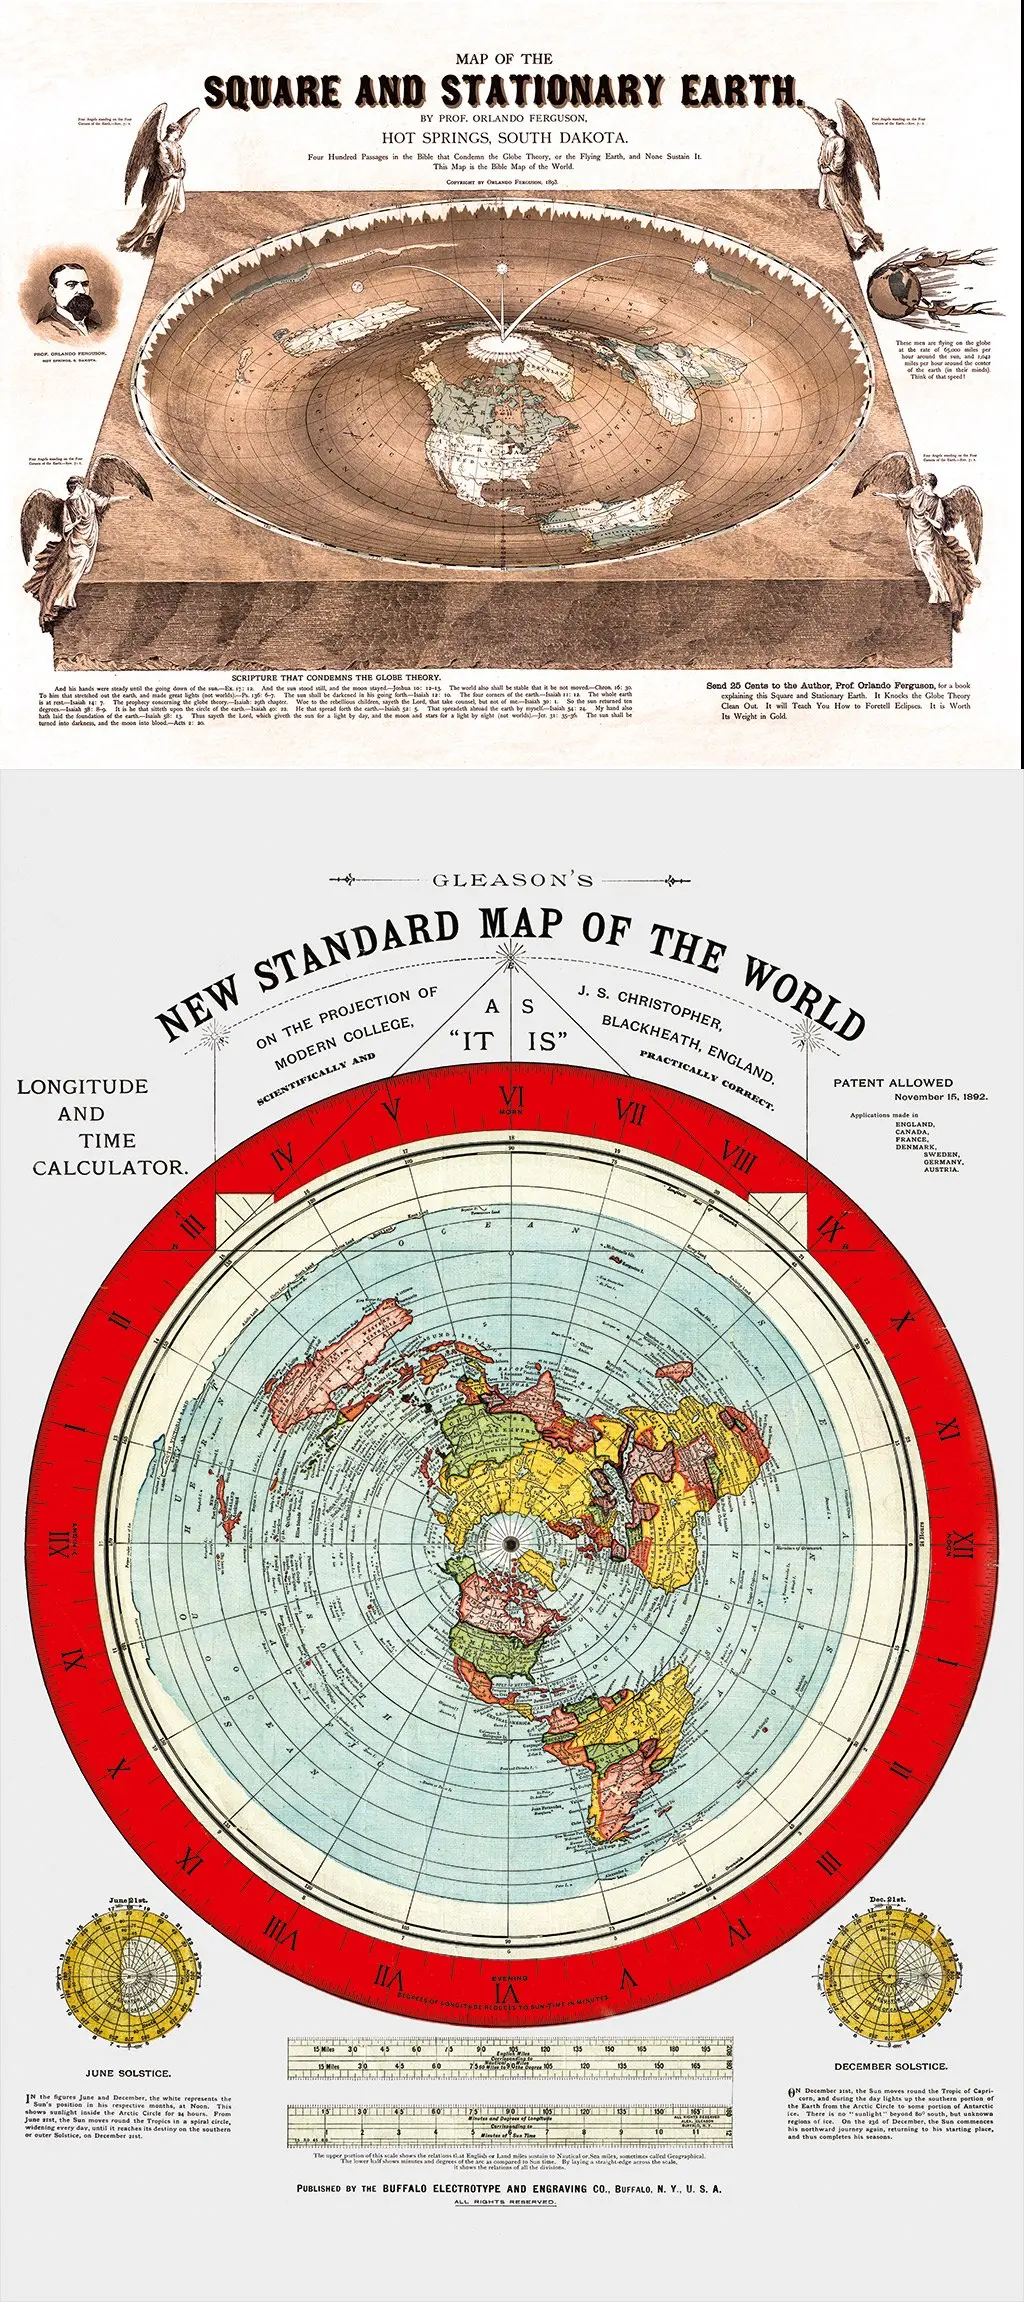 flat earth map 2021